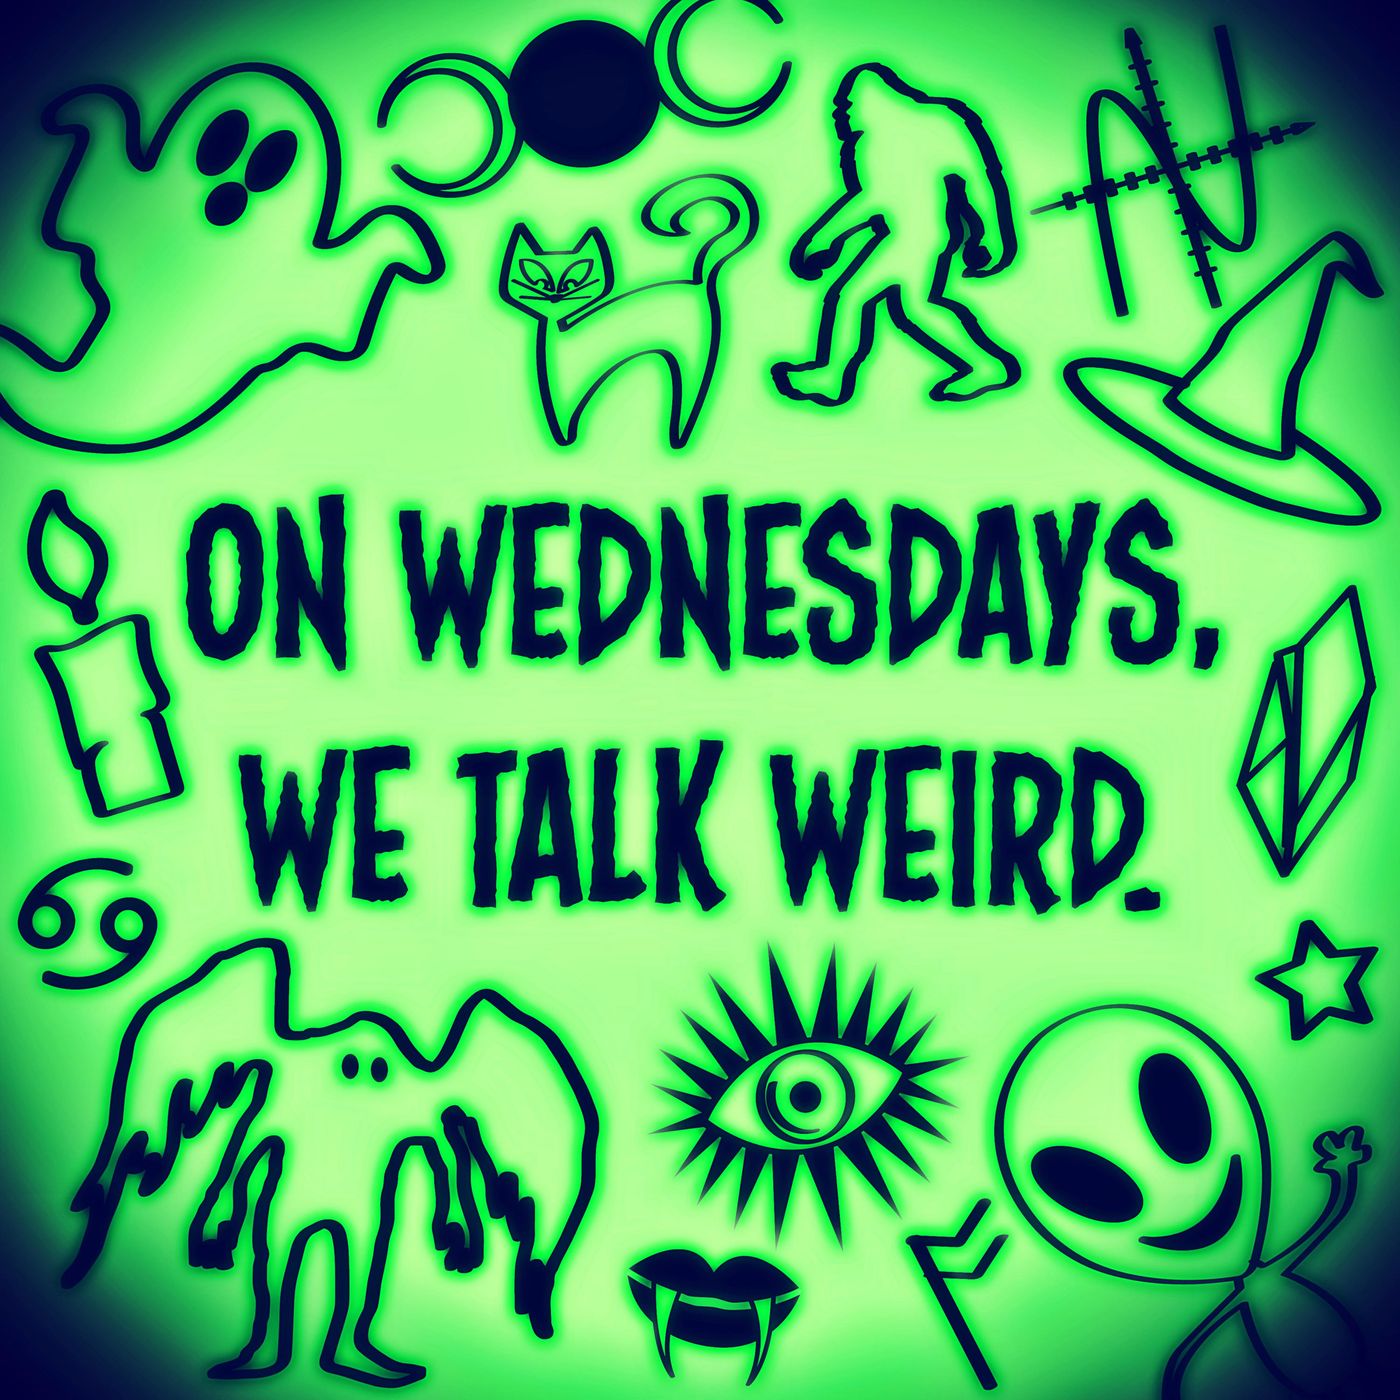 On Wednesdays, we talk weird